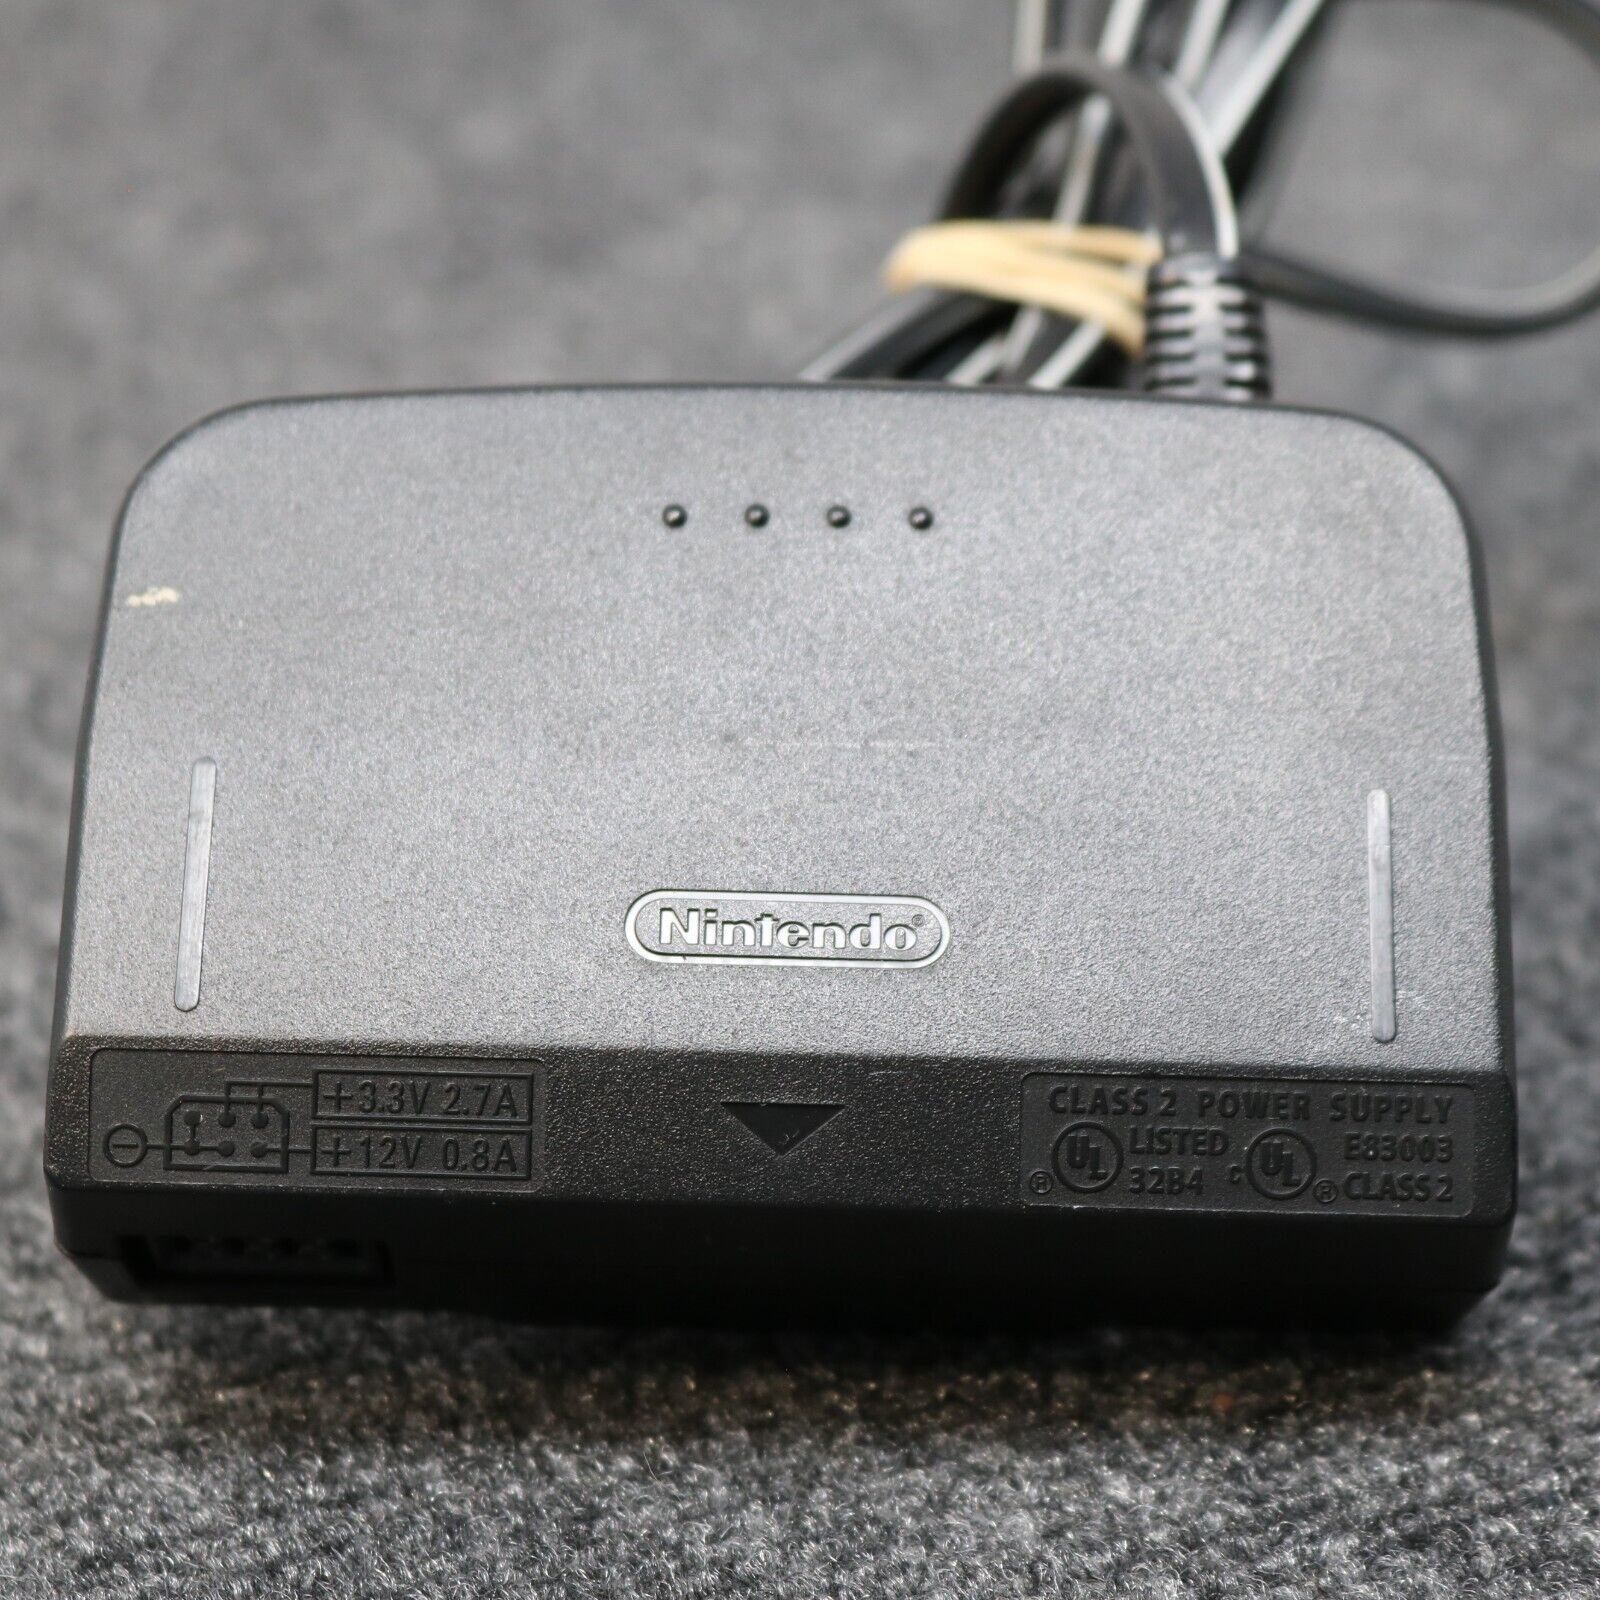 Official Nintendo 64 N64 OEM Power Cord AC Adapter NUS-002 NTSC Tested & Working - $9.89